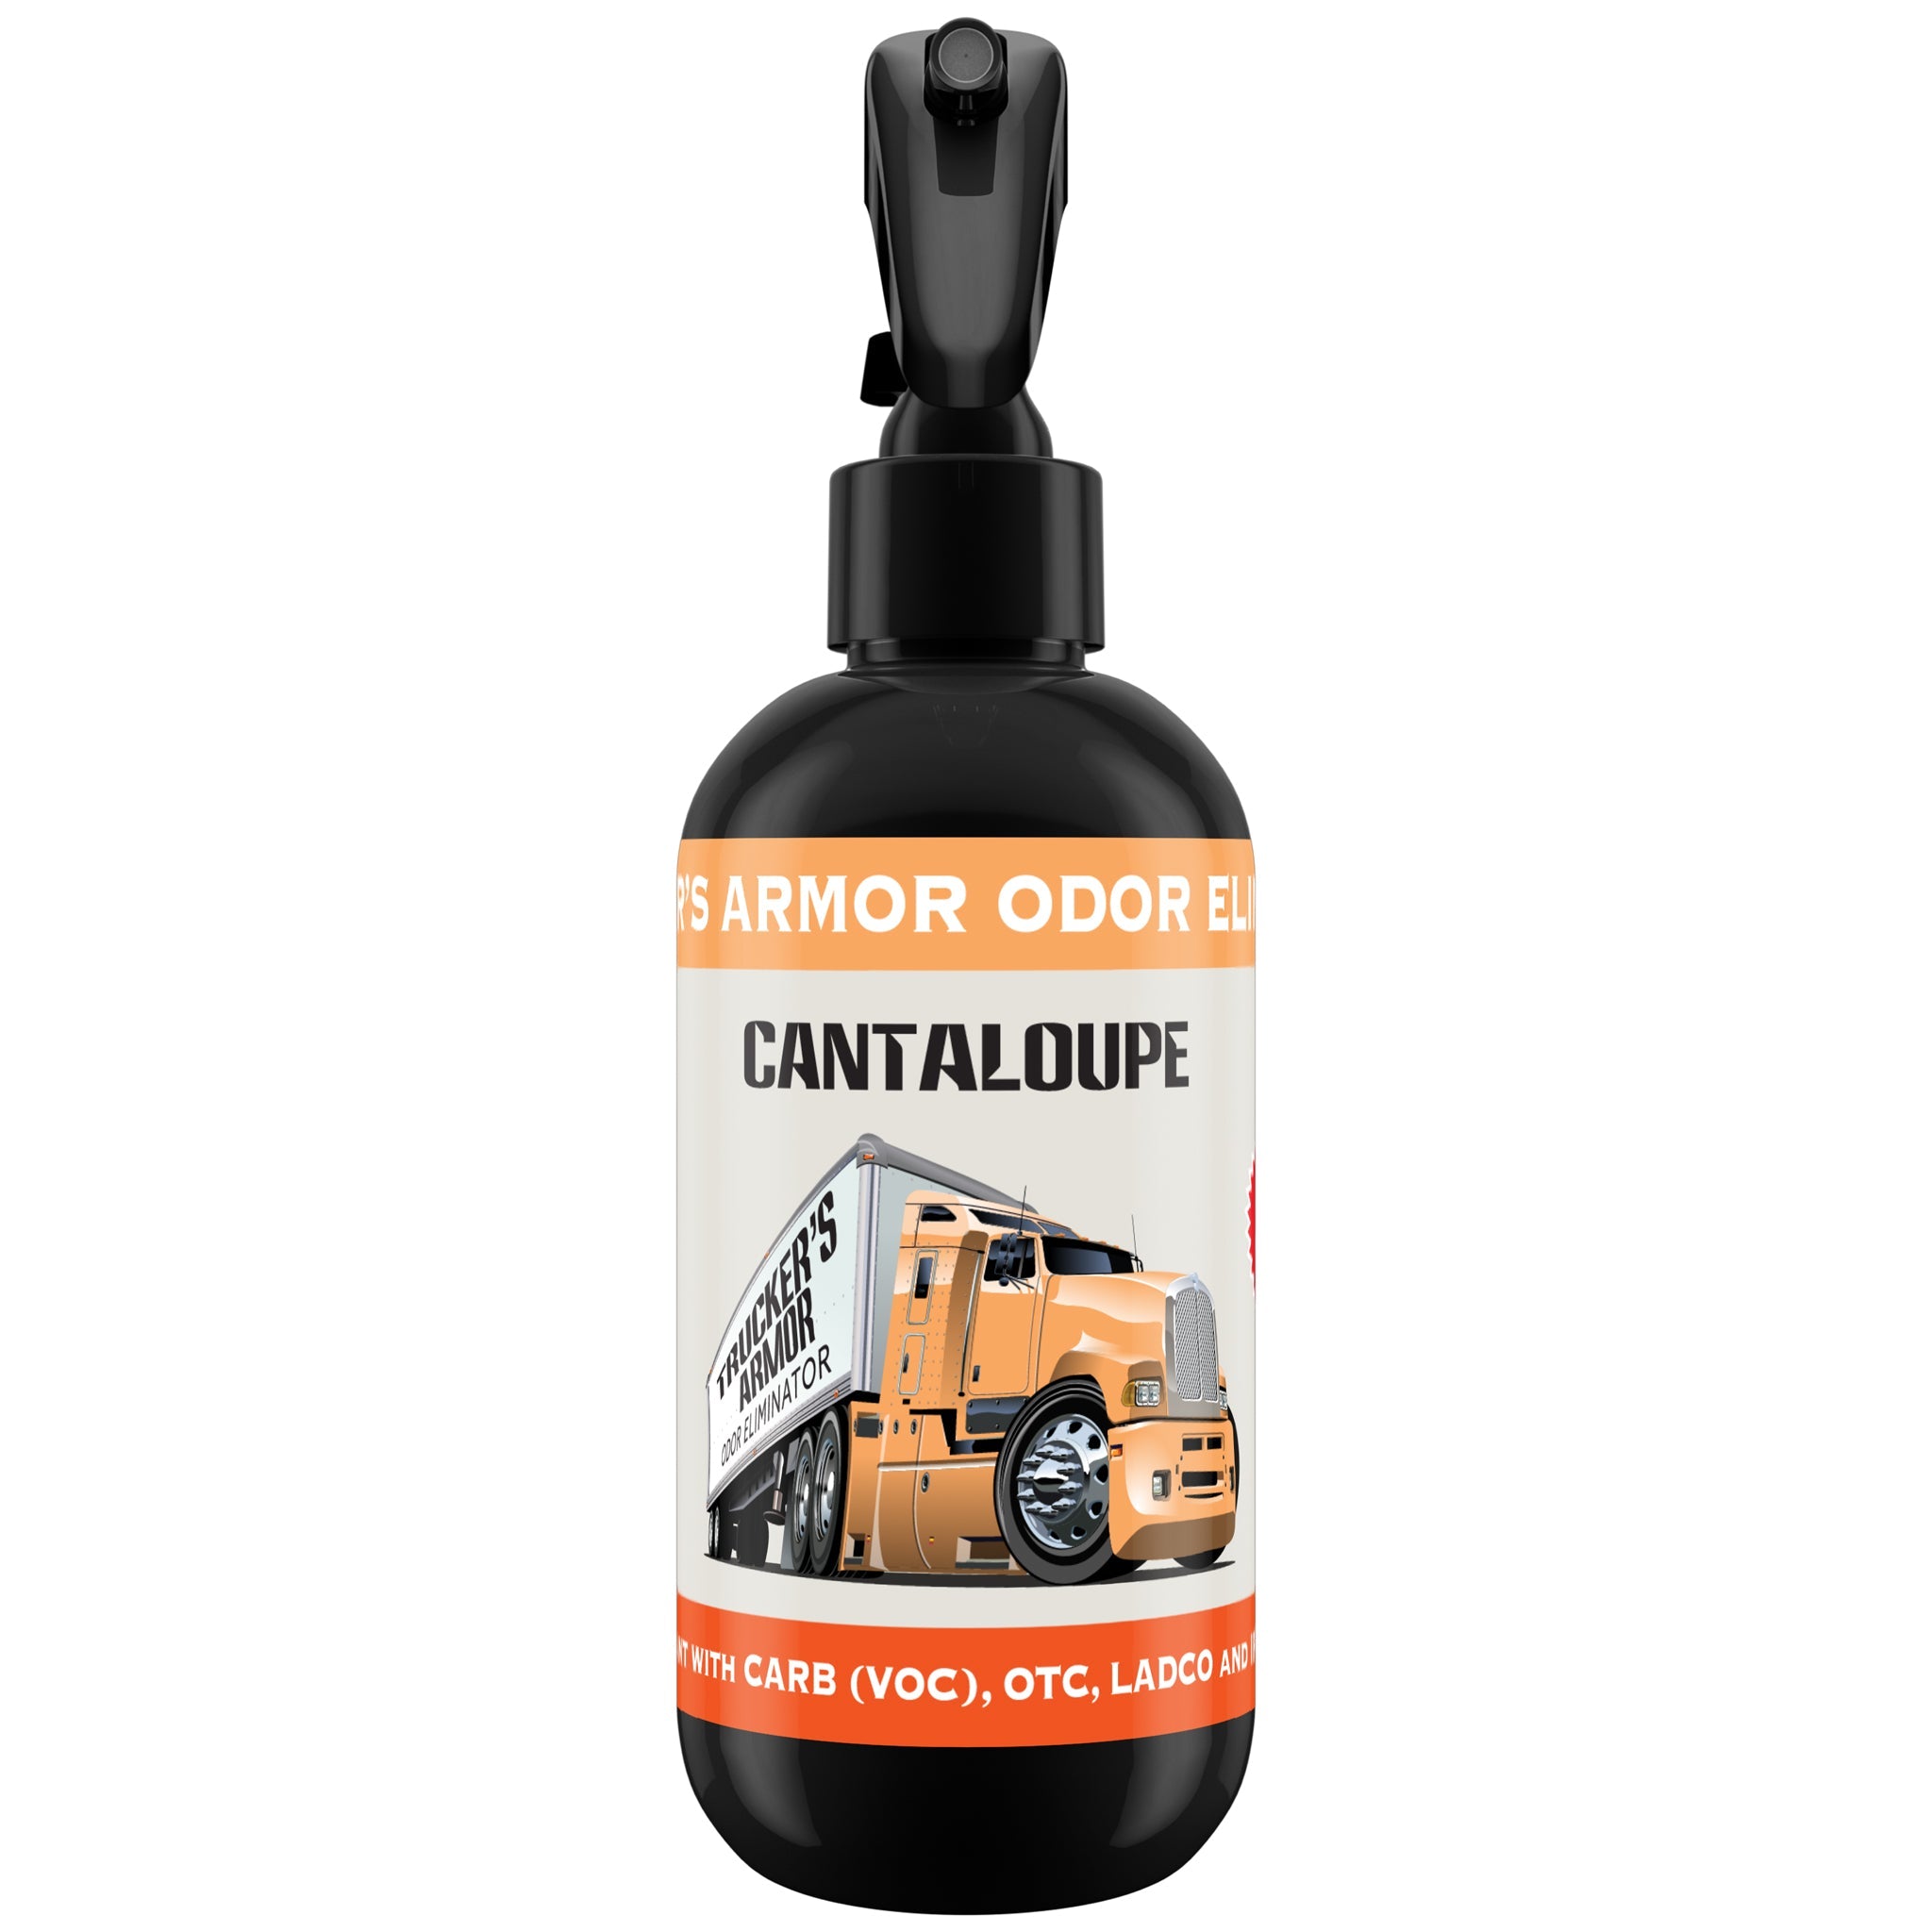 Trucker's Armor Odor Eliminator - Cantaloupe Scent